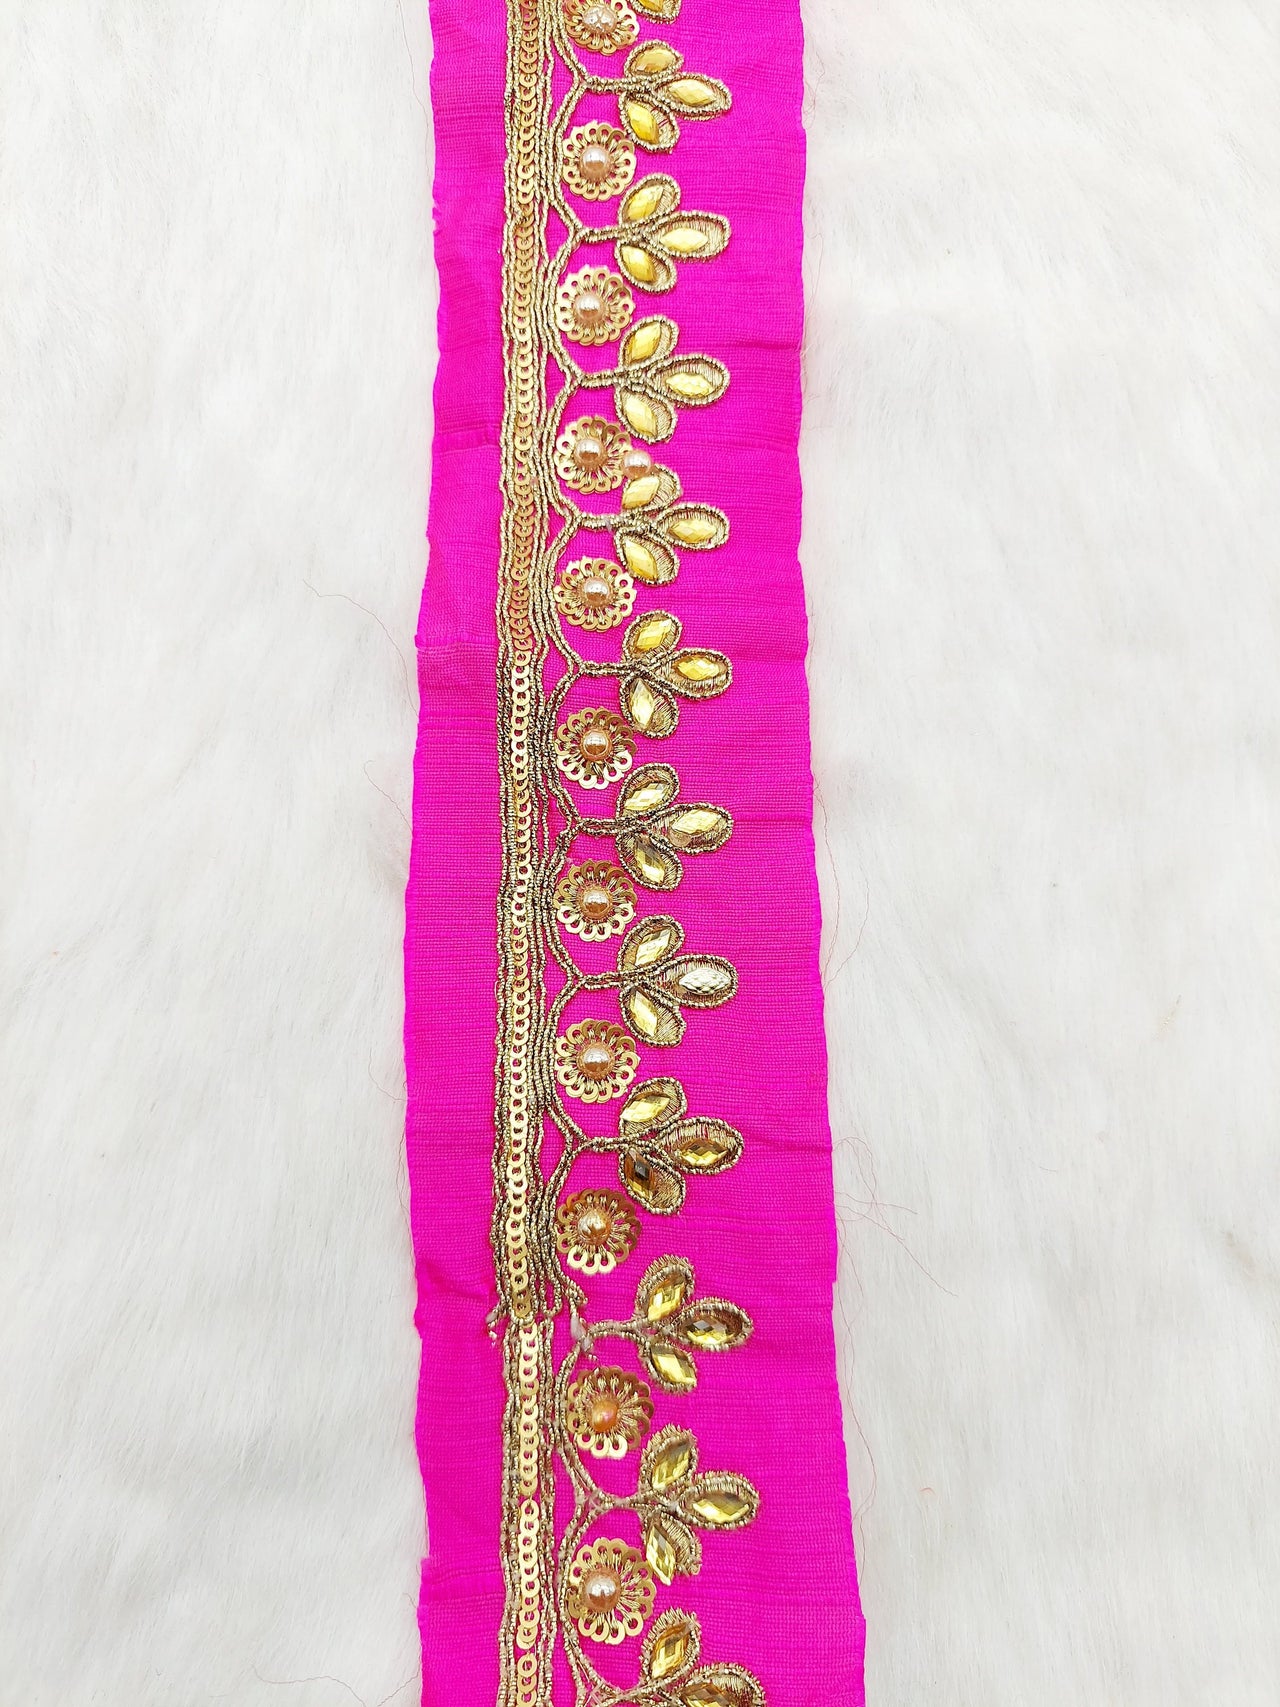 Fuchsia Pink Silk Fabric Lace Trim Floral Embroidery & Indian Stones Kundan Embellishment, Decorative Sari Trim, Floral Border Trim By Yard